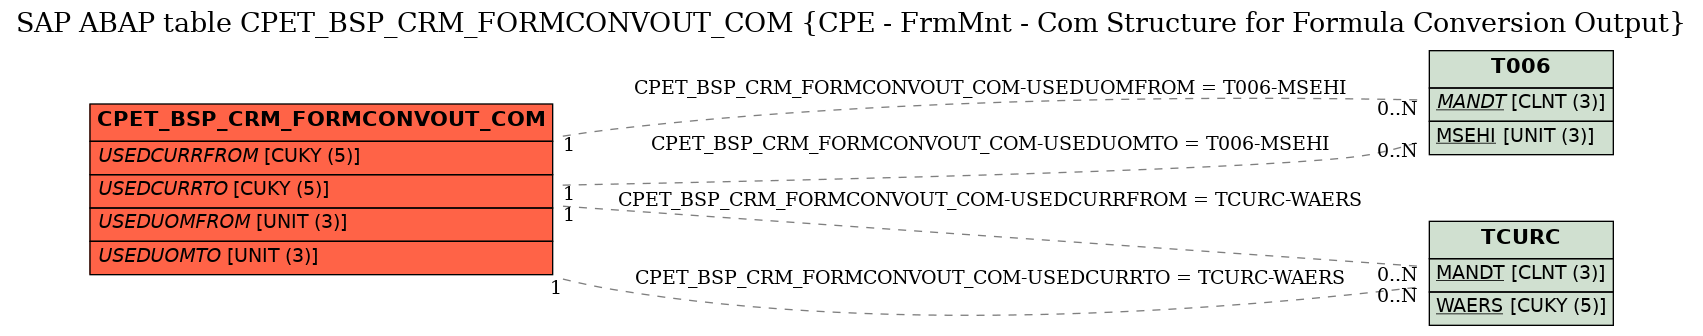 E-R Diagram for table CPET_BSP_CRM_FORMCONVOUT_COM (CPE - FrmMnt - Com Structure for Formula Conversion Output)